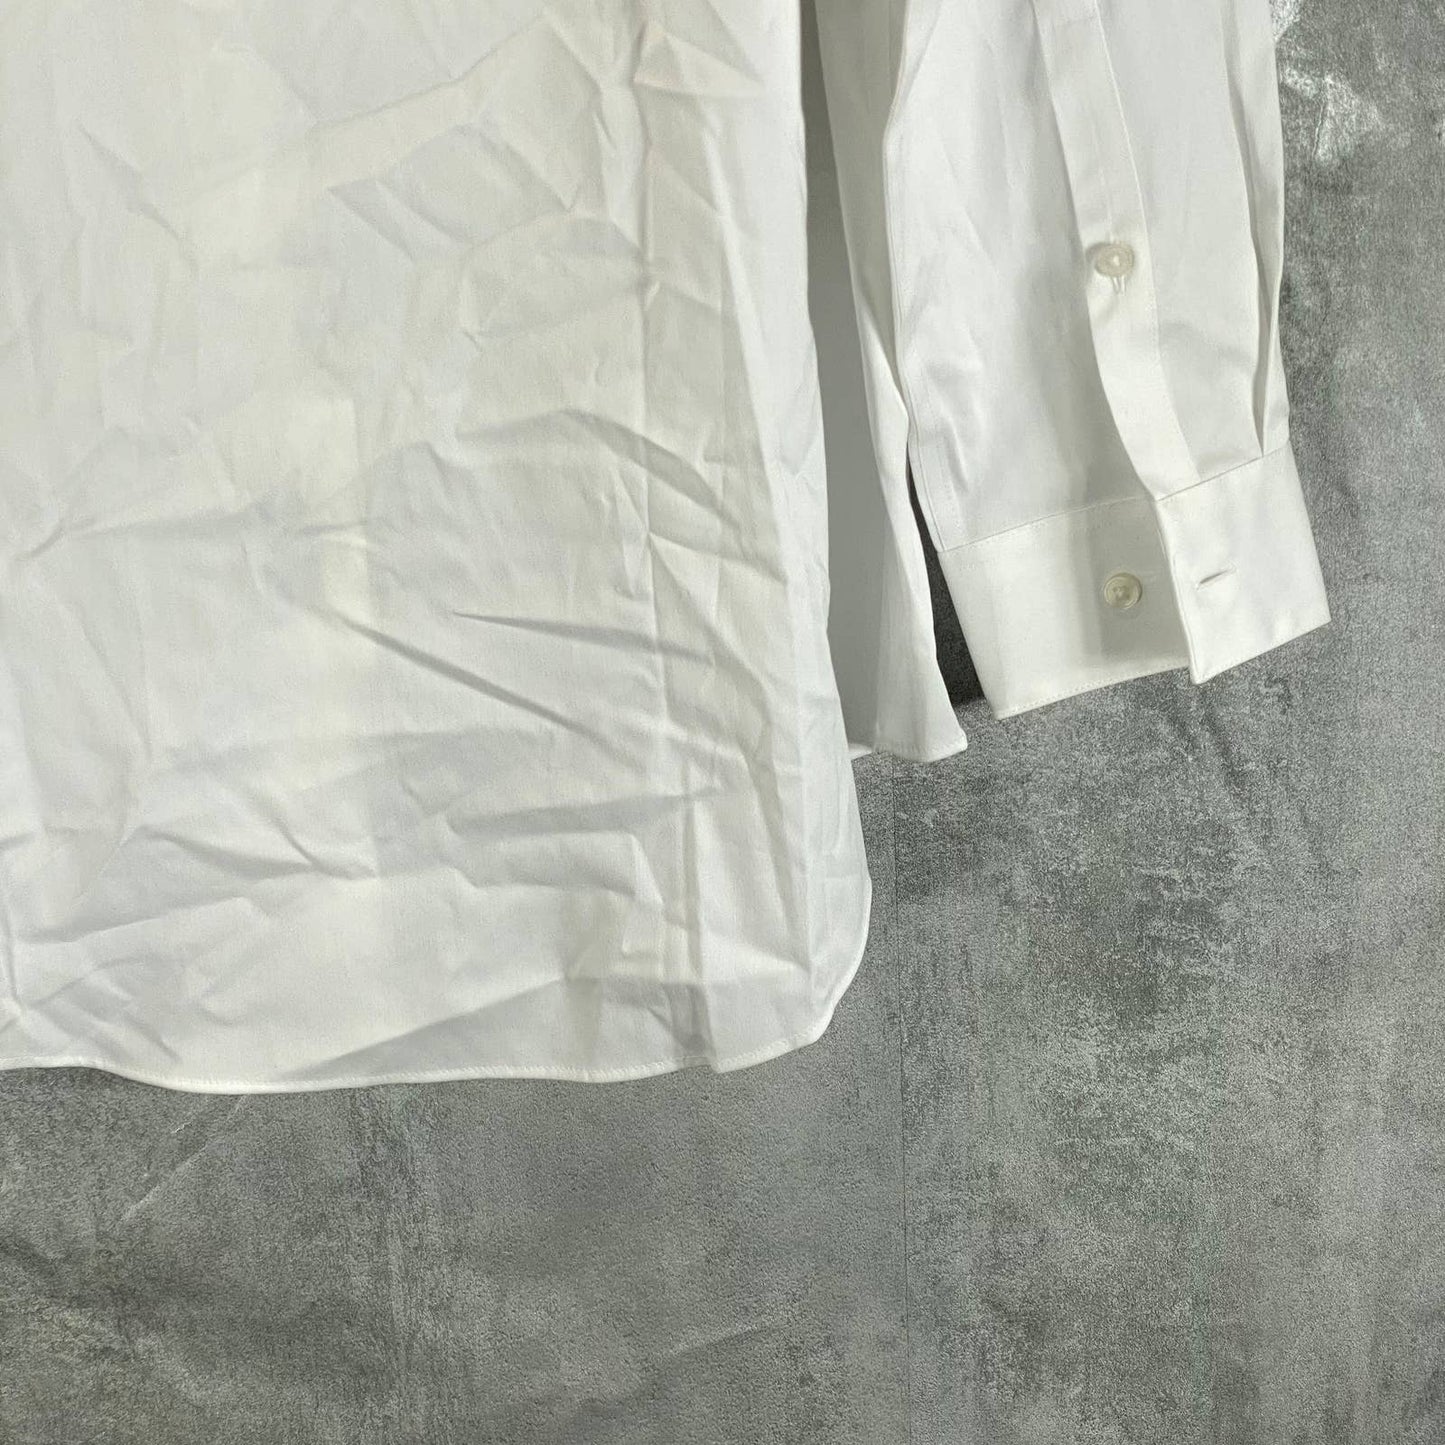 CALVIN KLEIN Men's White Infinite Color Sustainable Slim-Fit Stretch Shirt SZ L